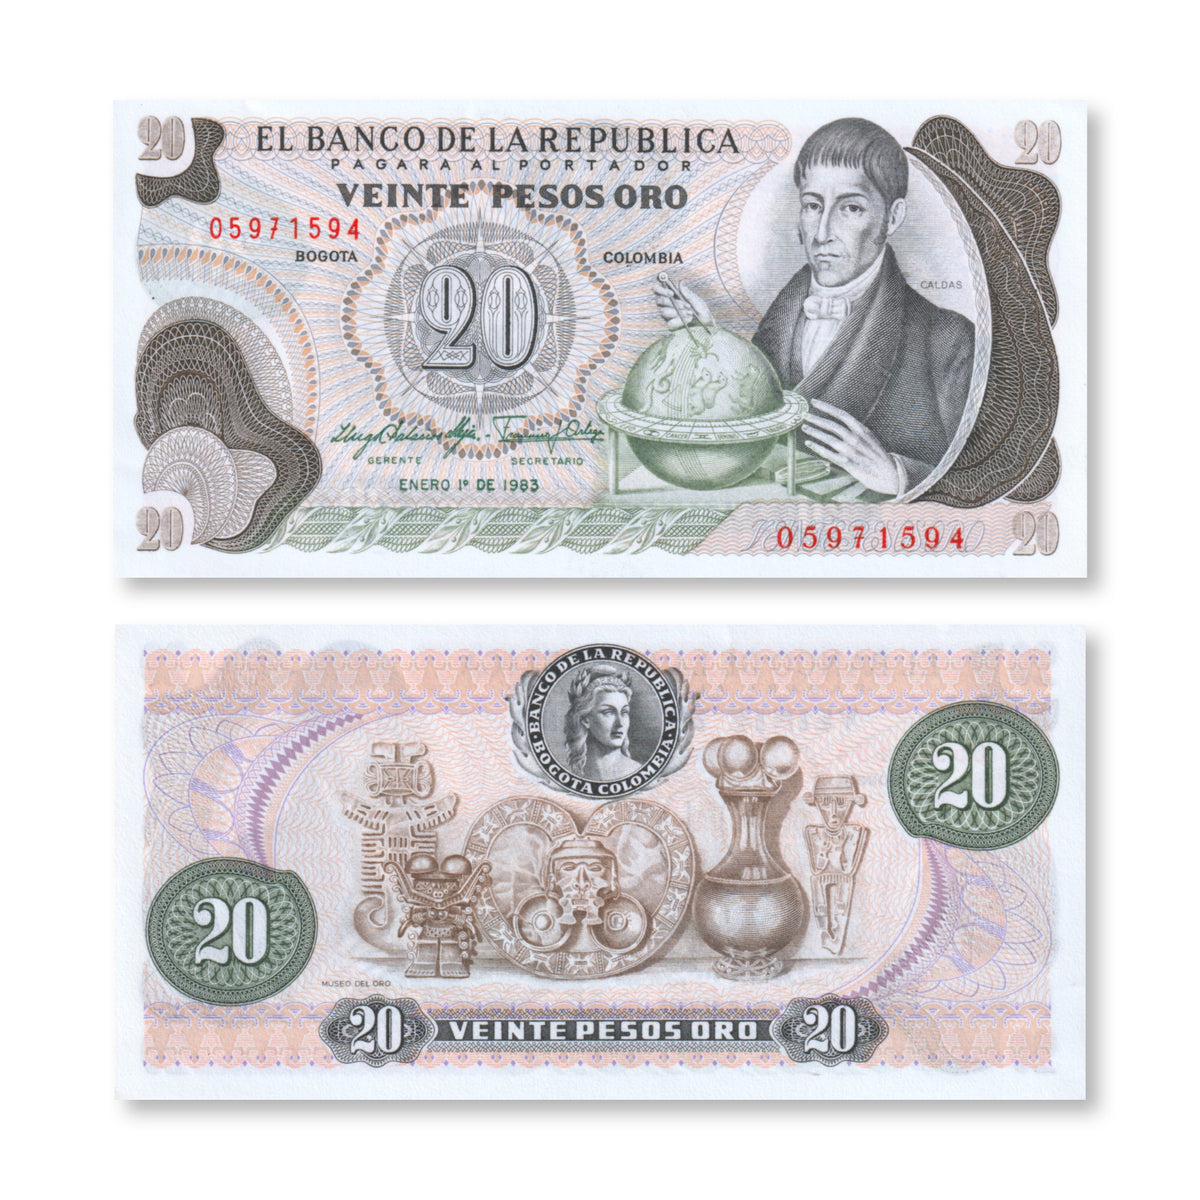 Colombia 20 Pesos oro, 1982, B951k, P409d, UNC - Robert's World Money - World Banknotes